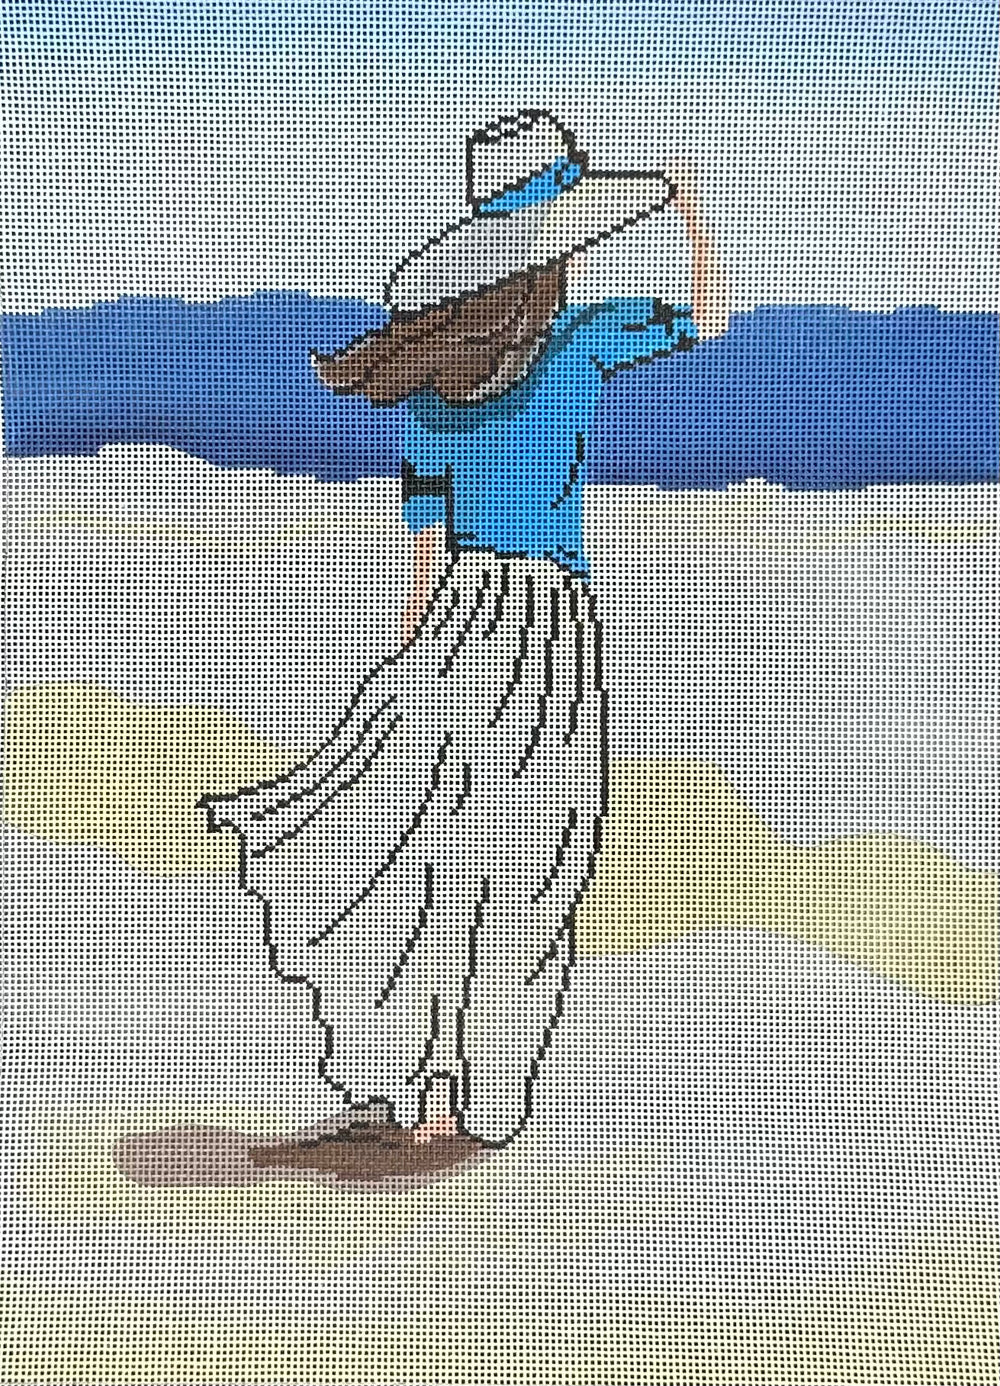 Beach Lady